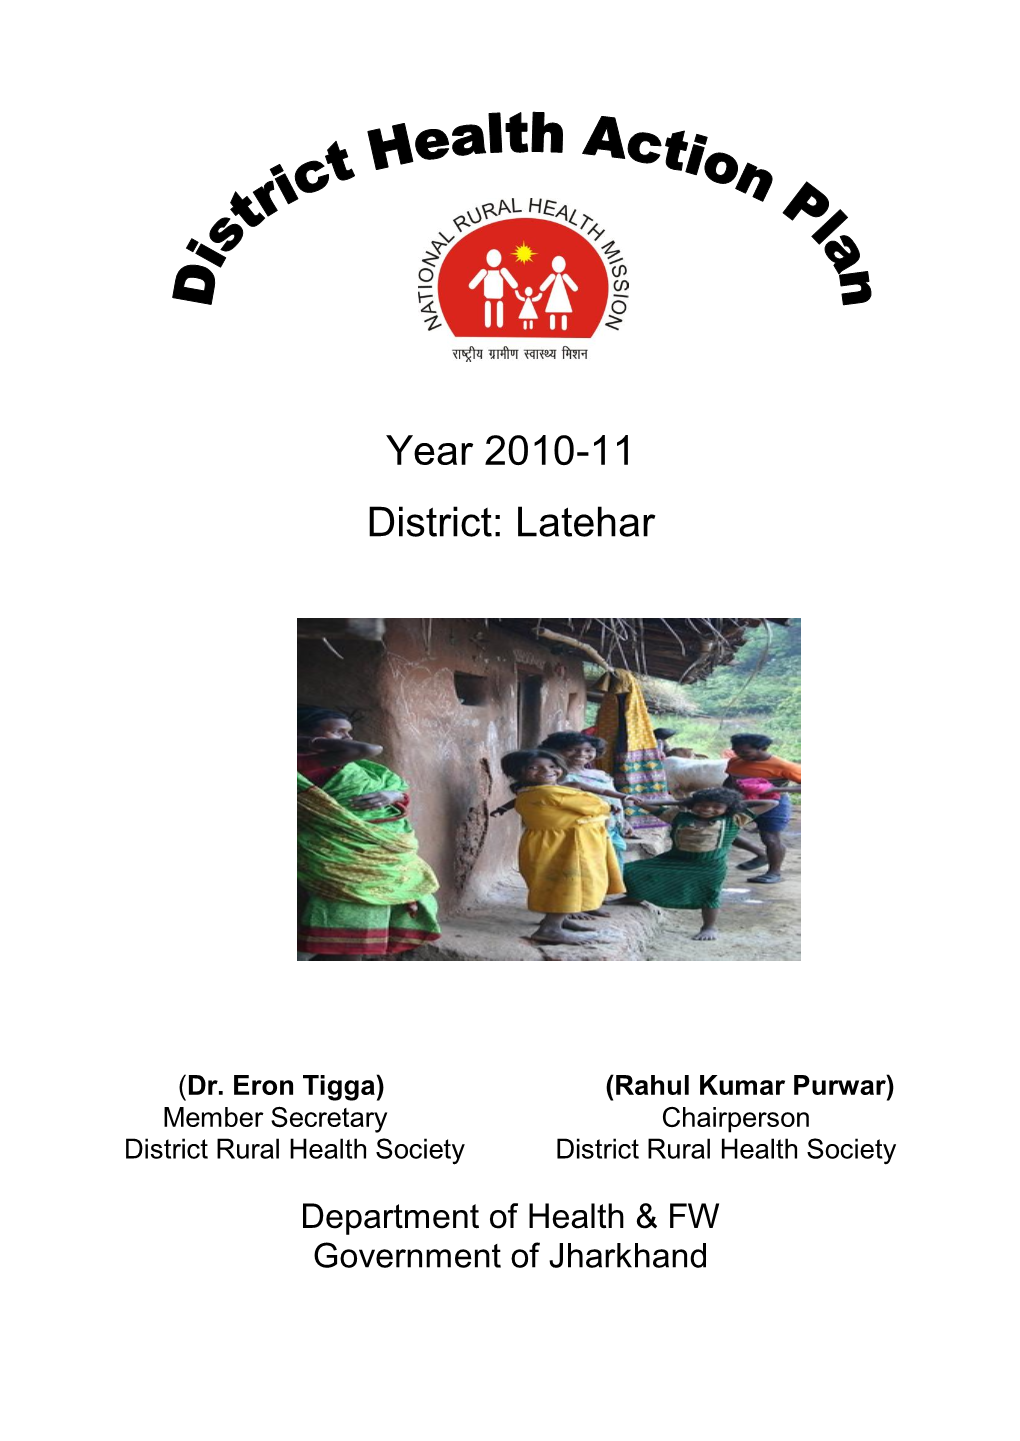 Year 2010-11 District: Latehar